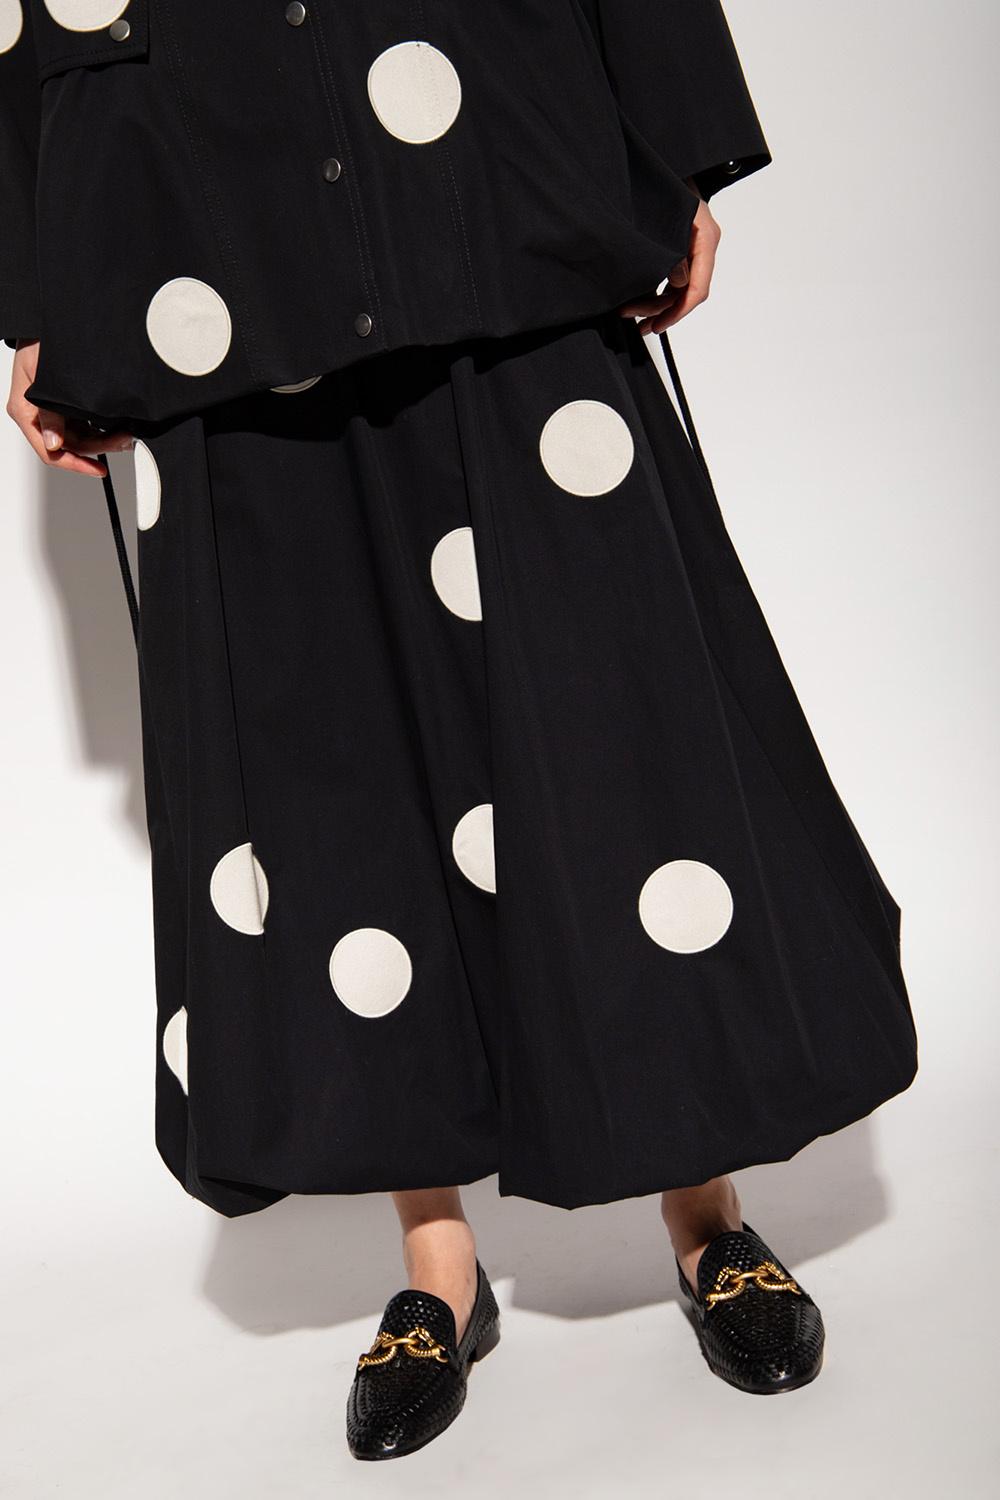 Tory Burch Polka Dot Skirt in Black | Lyst